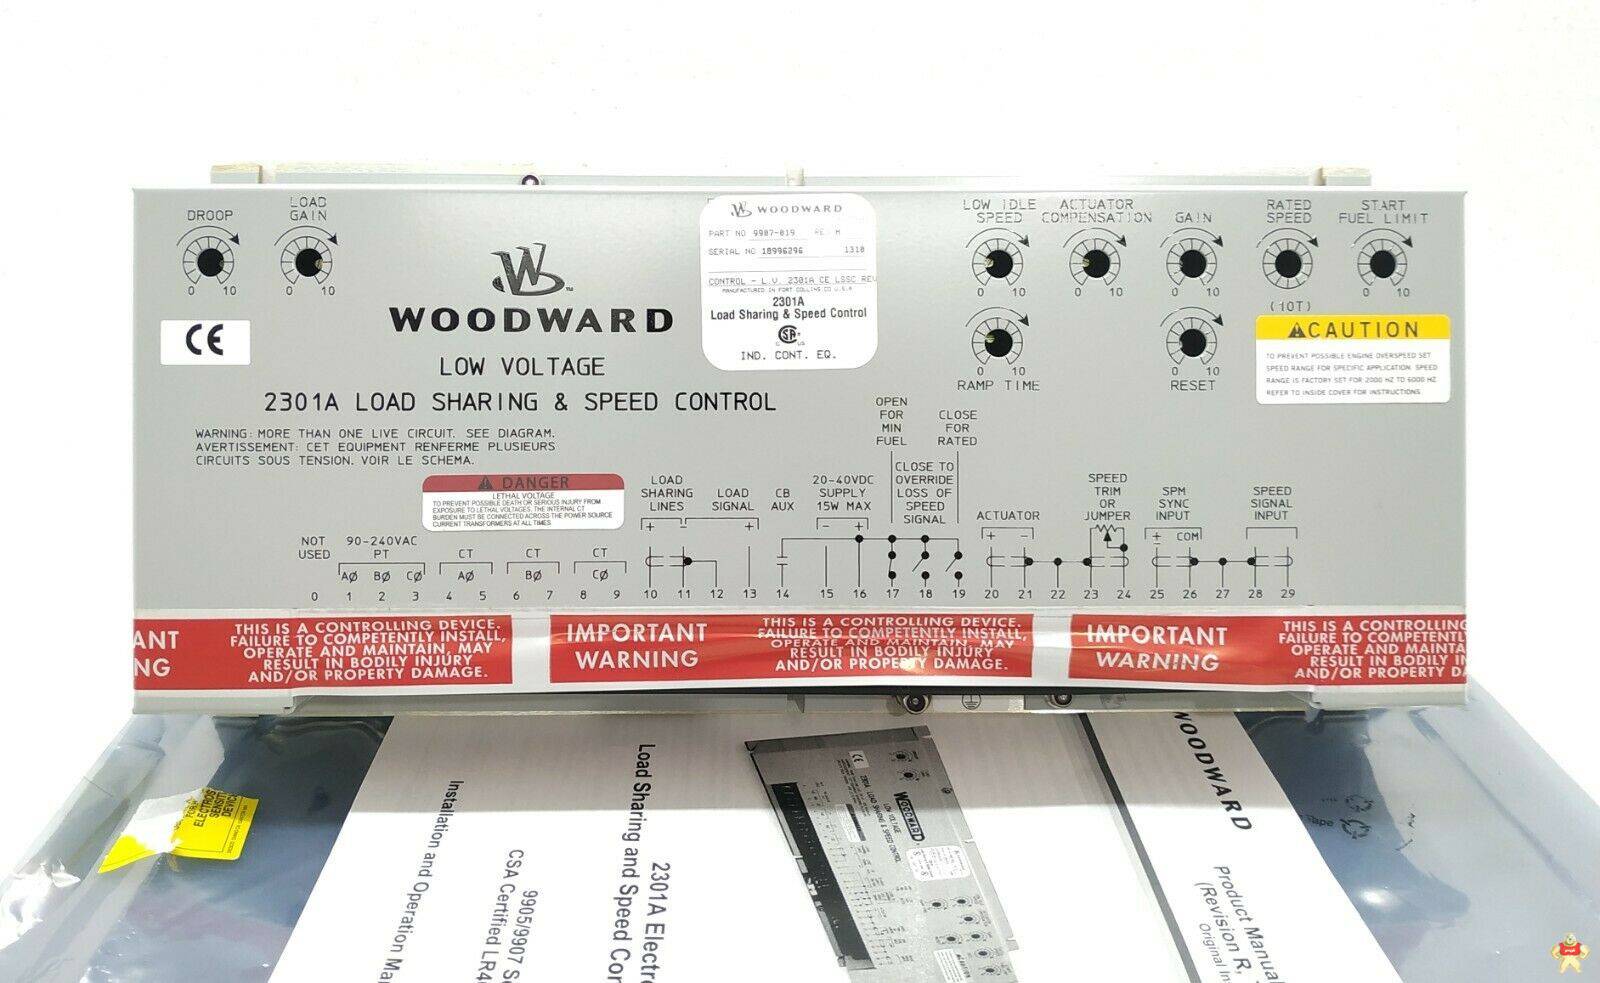 WOODWARD 8226-043伍德沃德船舶备件供应 全新原装,库存现货,质保一年